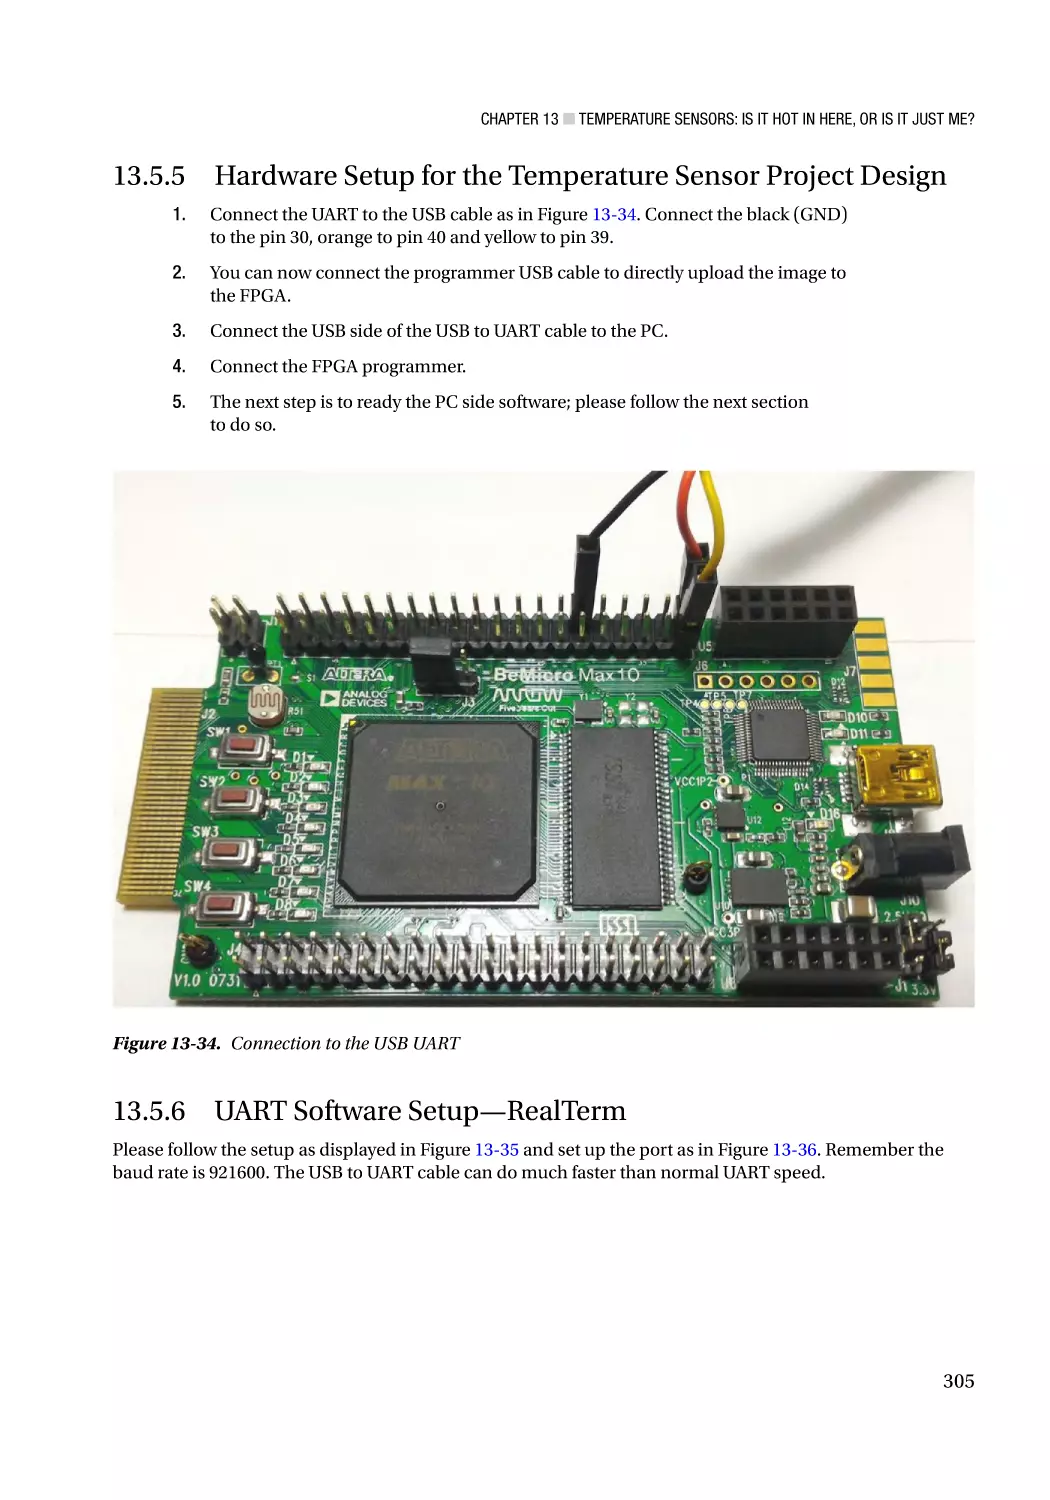 13.5.5 Hardware Setup for the Temperature Sensor Project Design
13.5.6 UART Software Setup—RealTerm